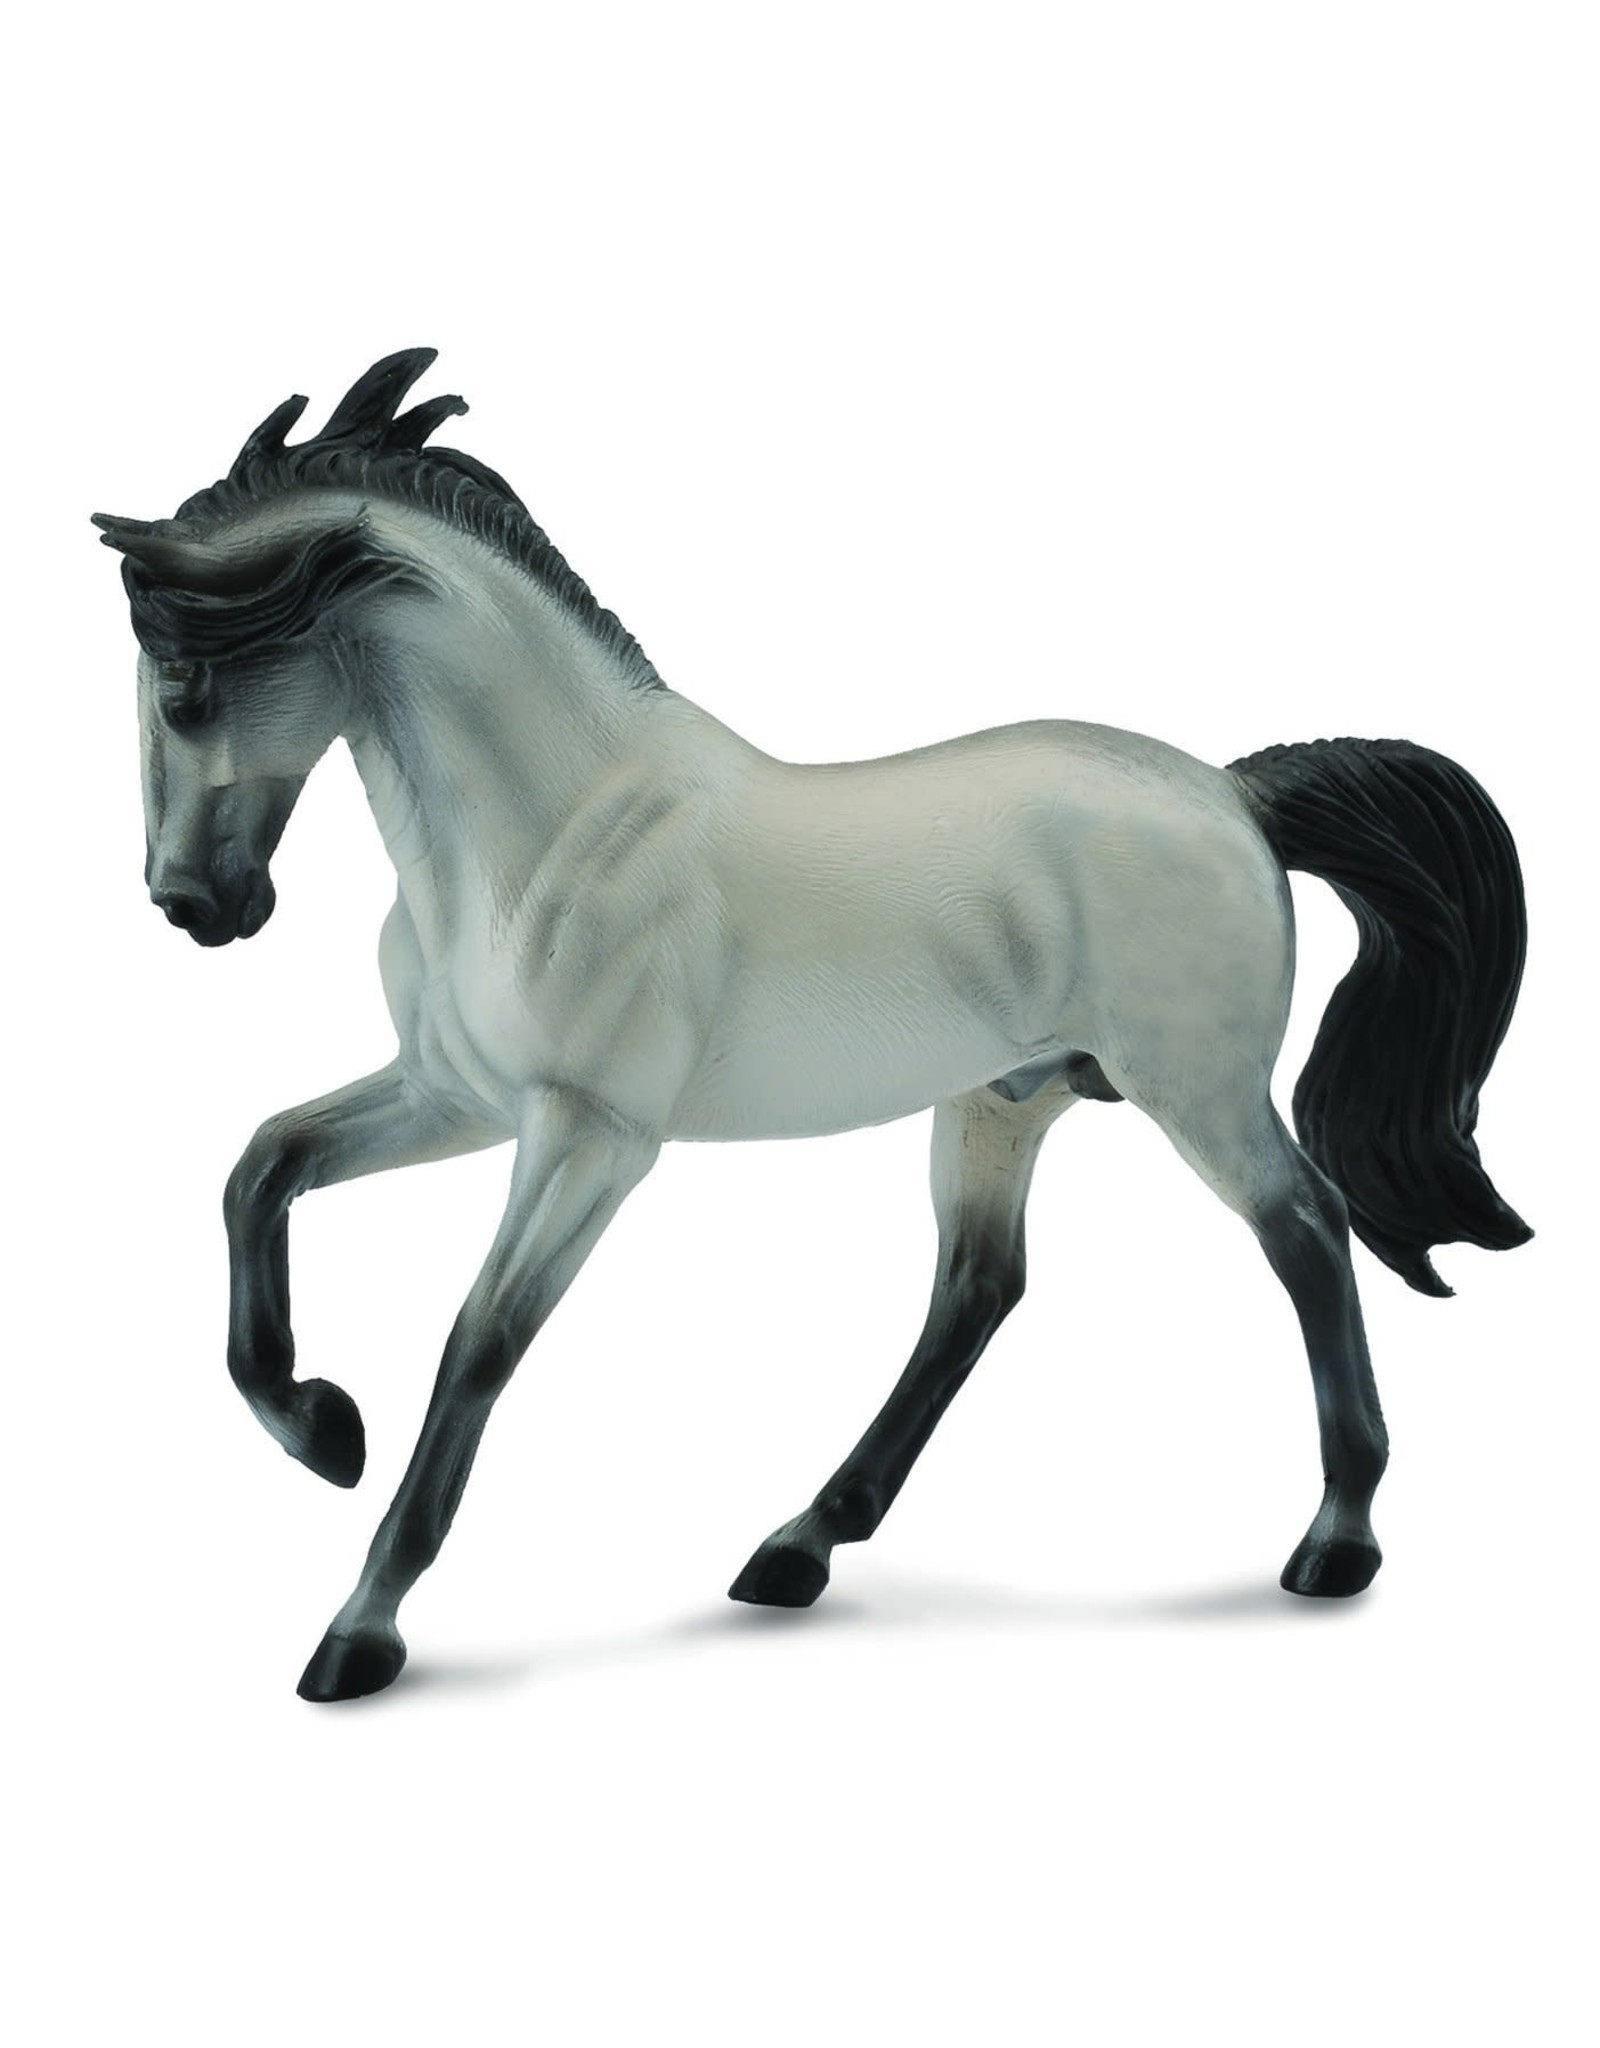 Grey Andalusian Stallion